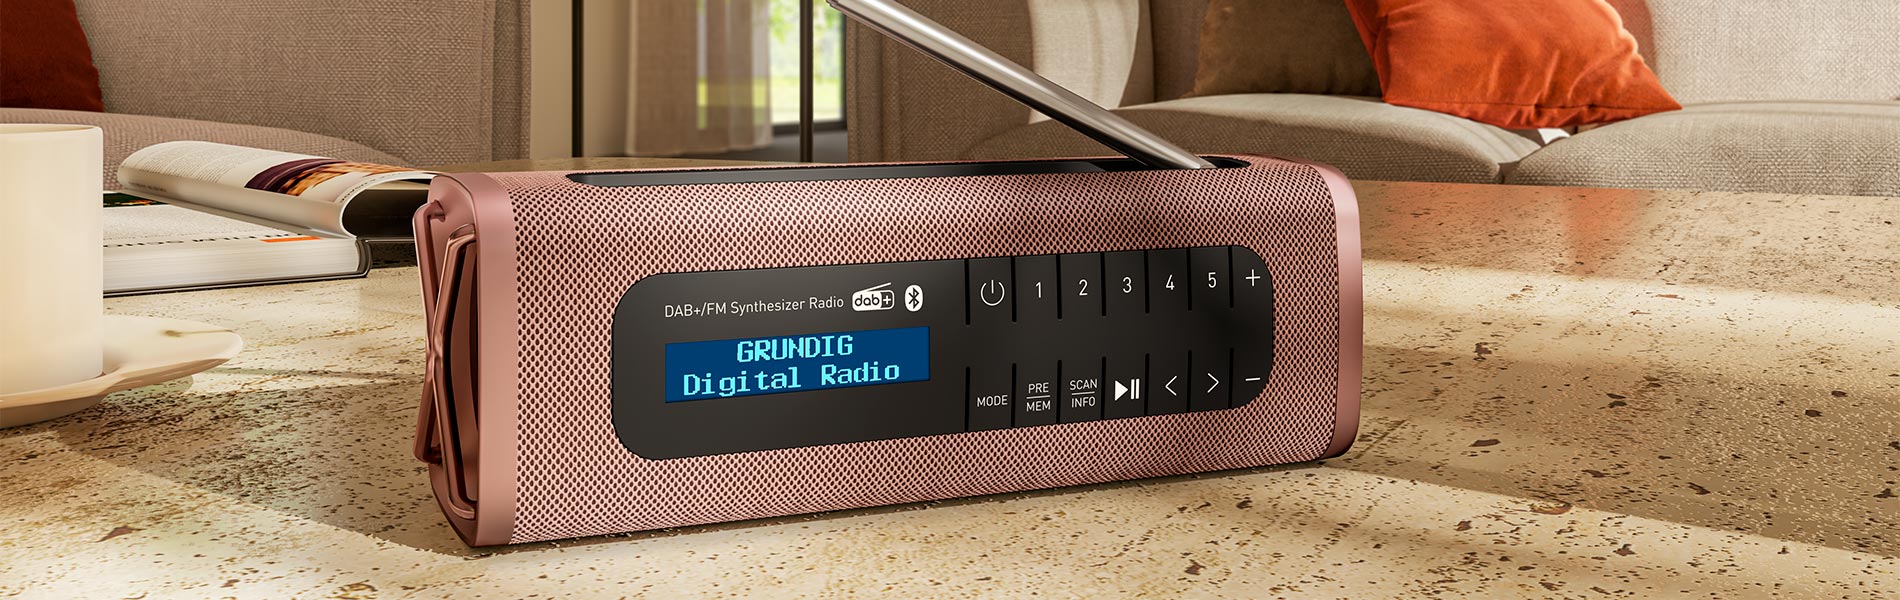 Nestor DAB+ Radio DAB+/FM 2 modos de funcionamiento pantalla de